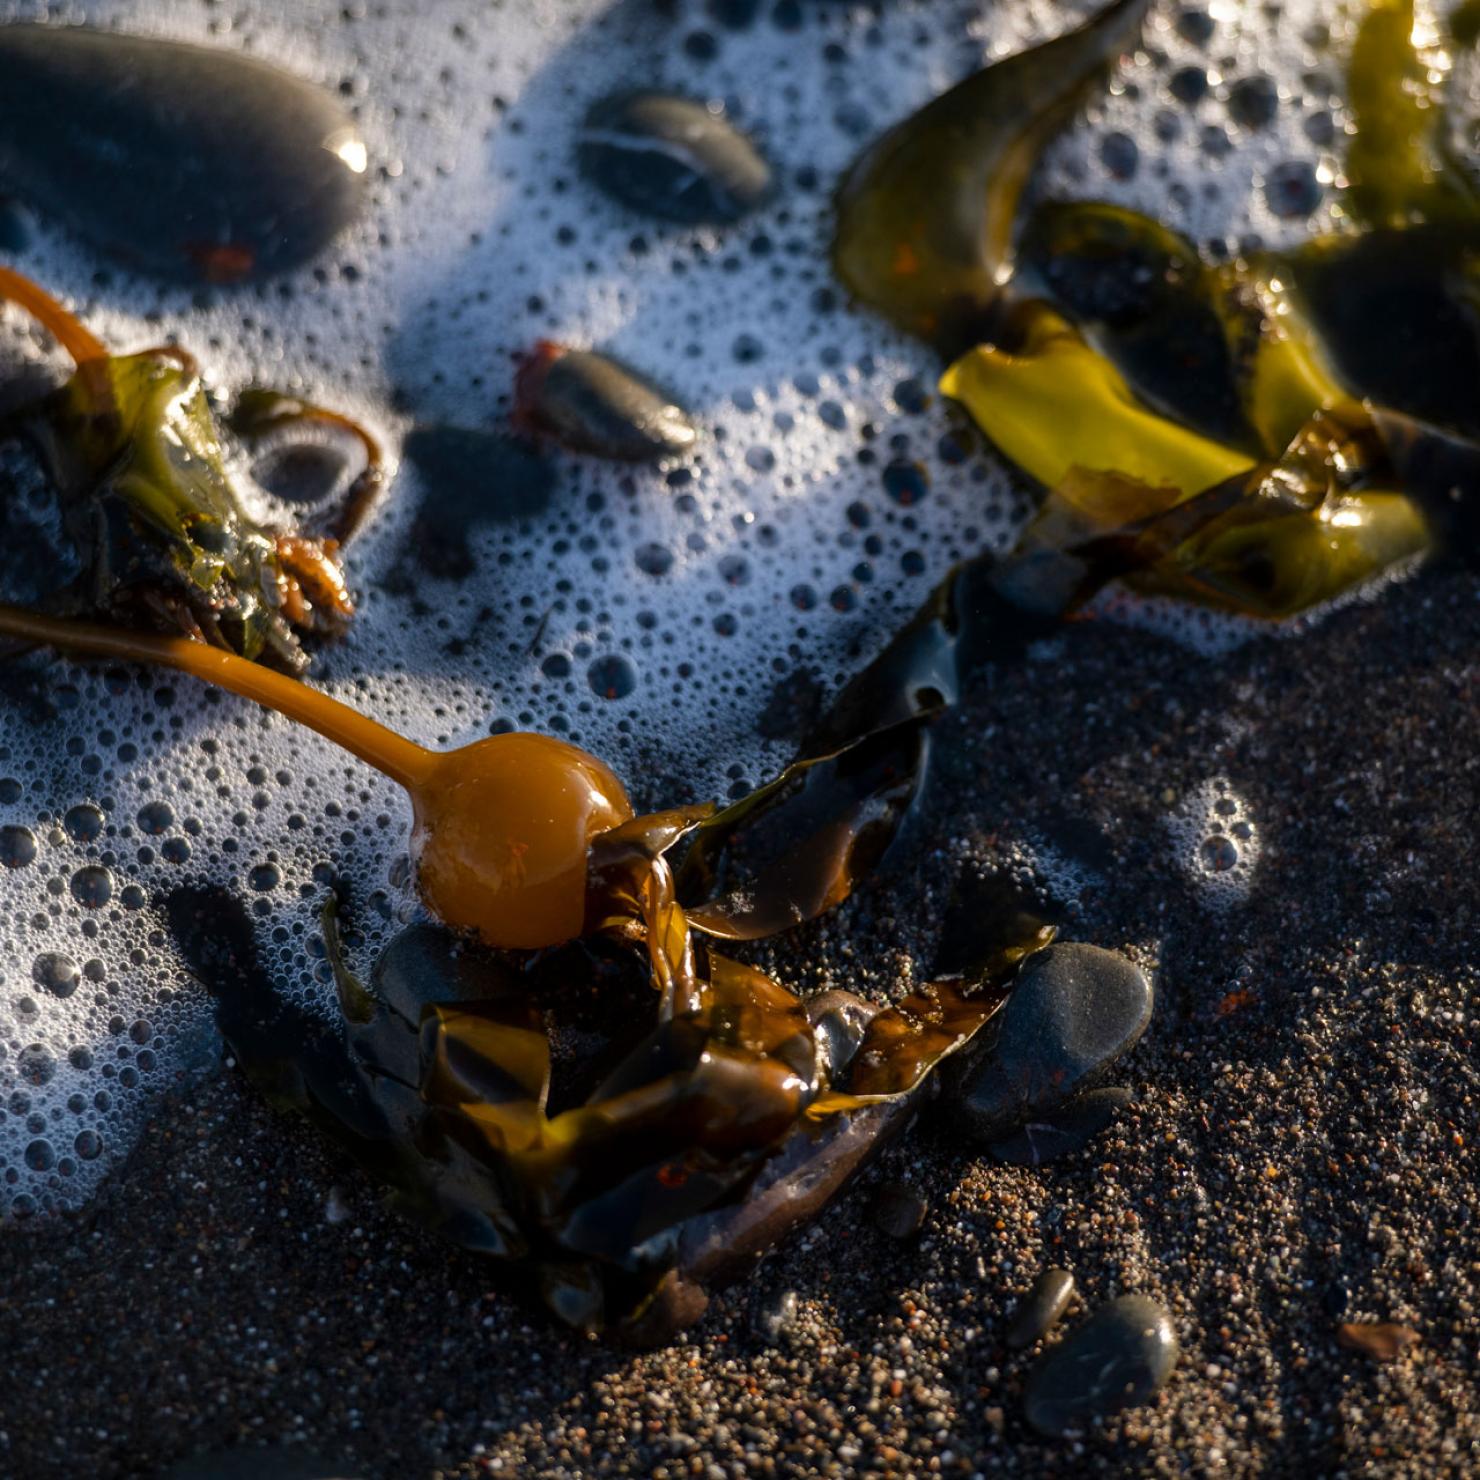 Baby kelp washed ashore in spring